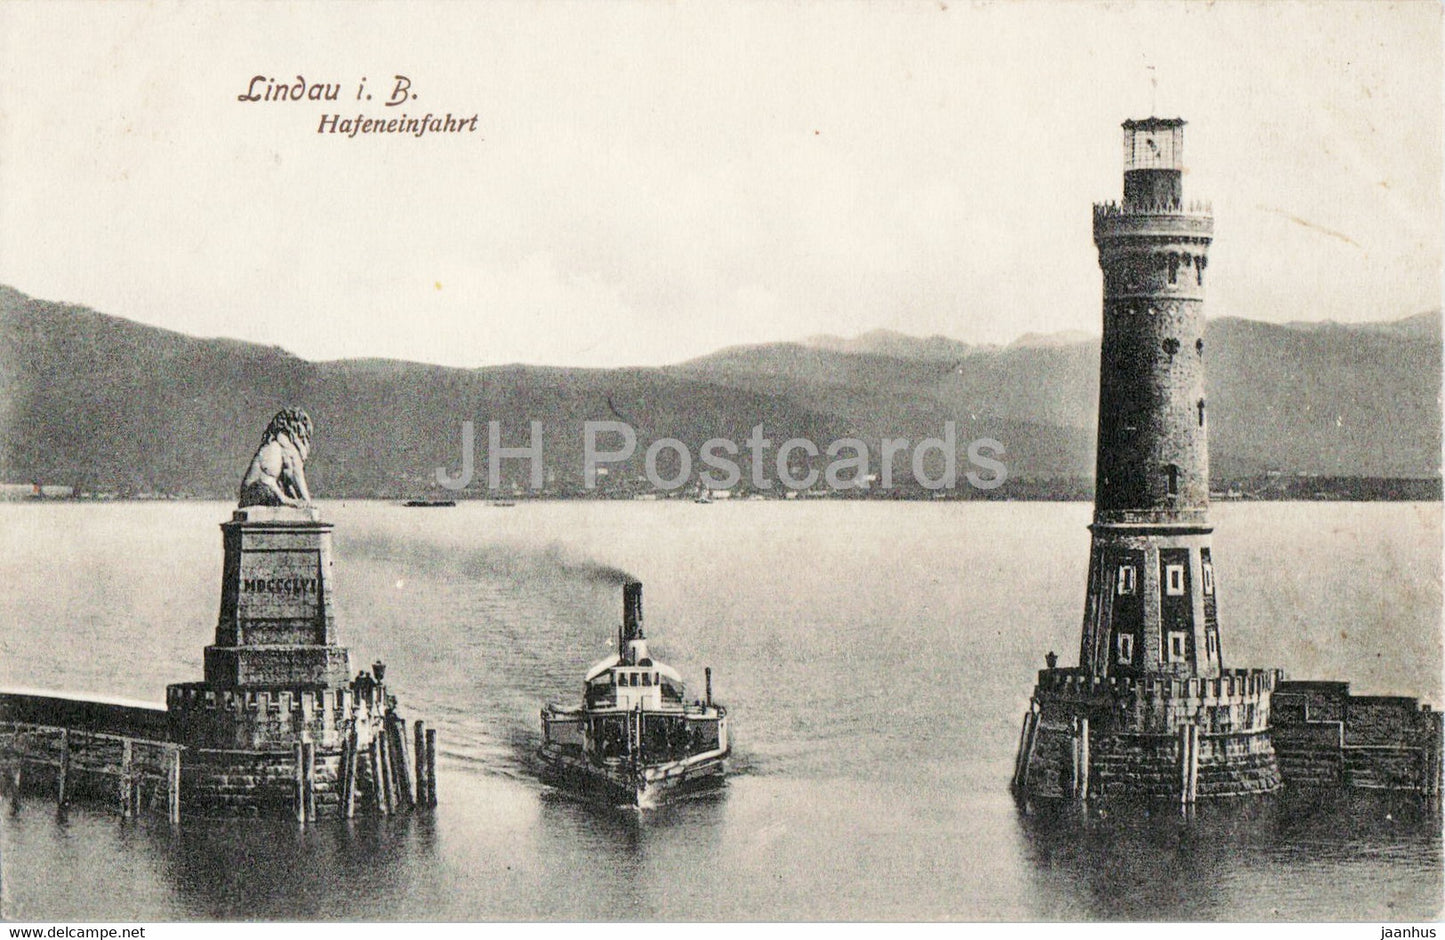 Lindau i B - Hafeneinfahrt - lighthouse - port - ship - old postcard - 1908 - Germany - used - JH Postcards